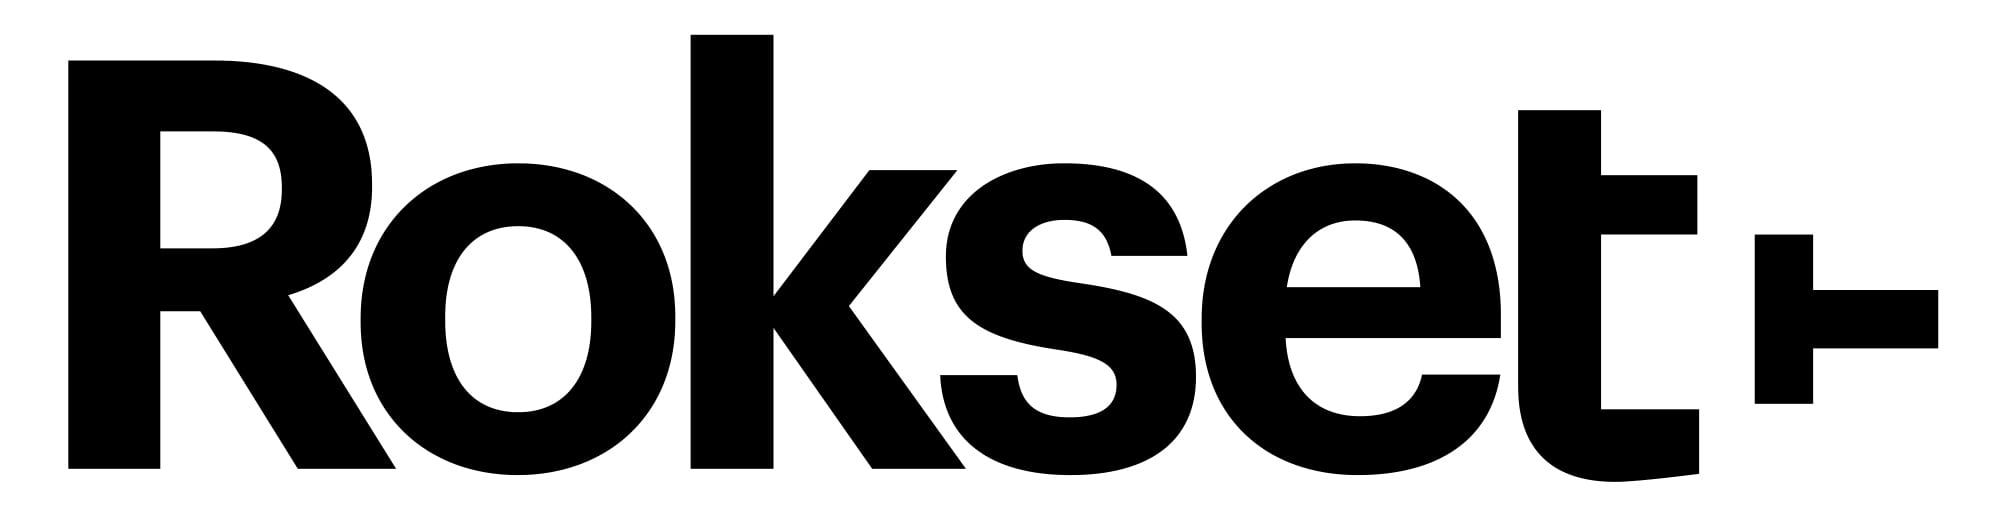 Rokset logo